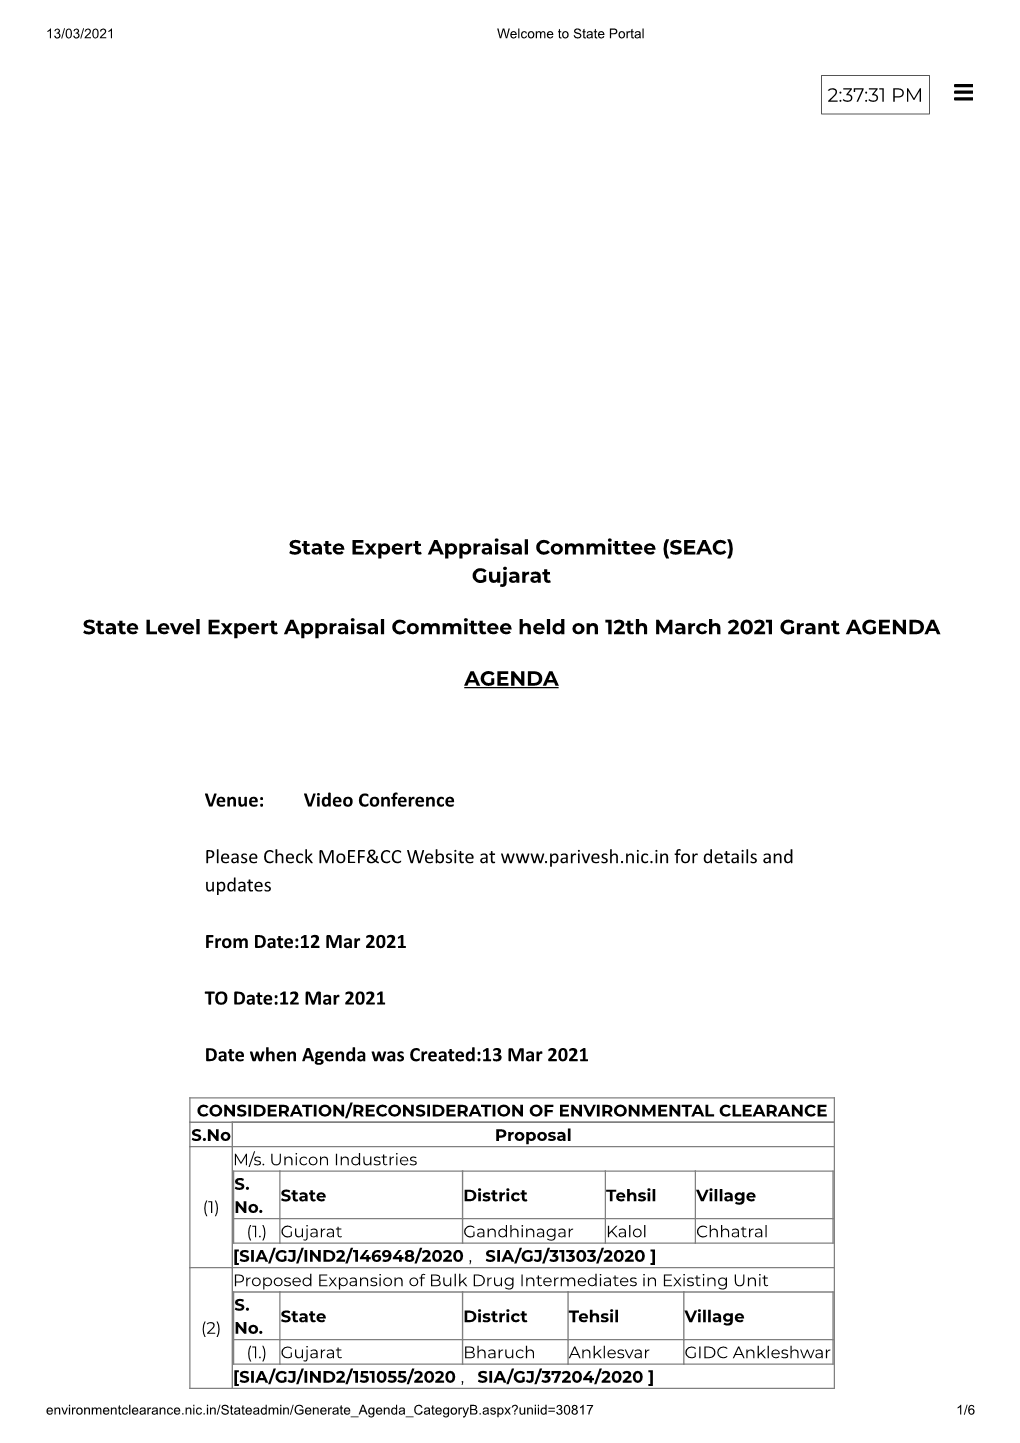 State Expert Appraisal Committee (SEAC) Gujarat